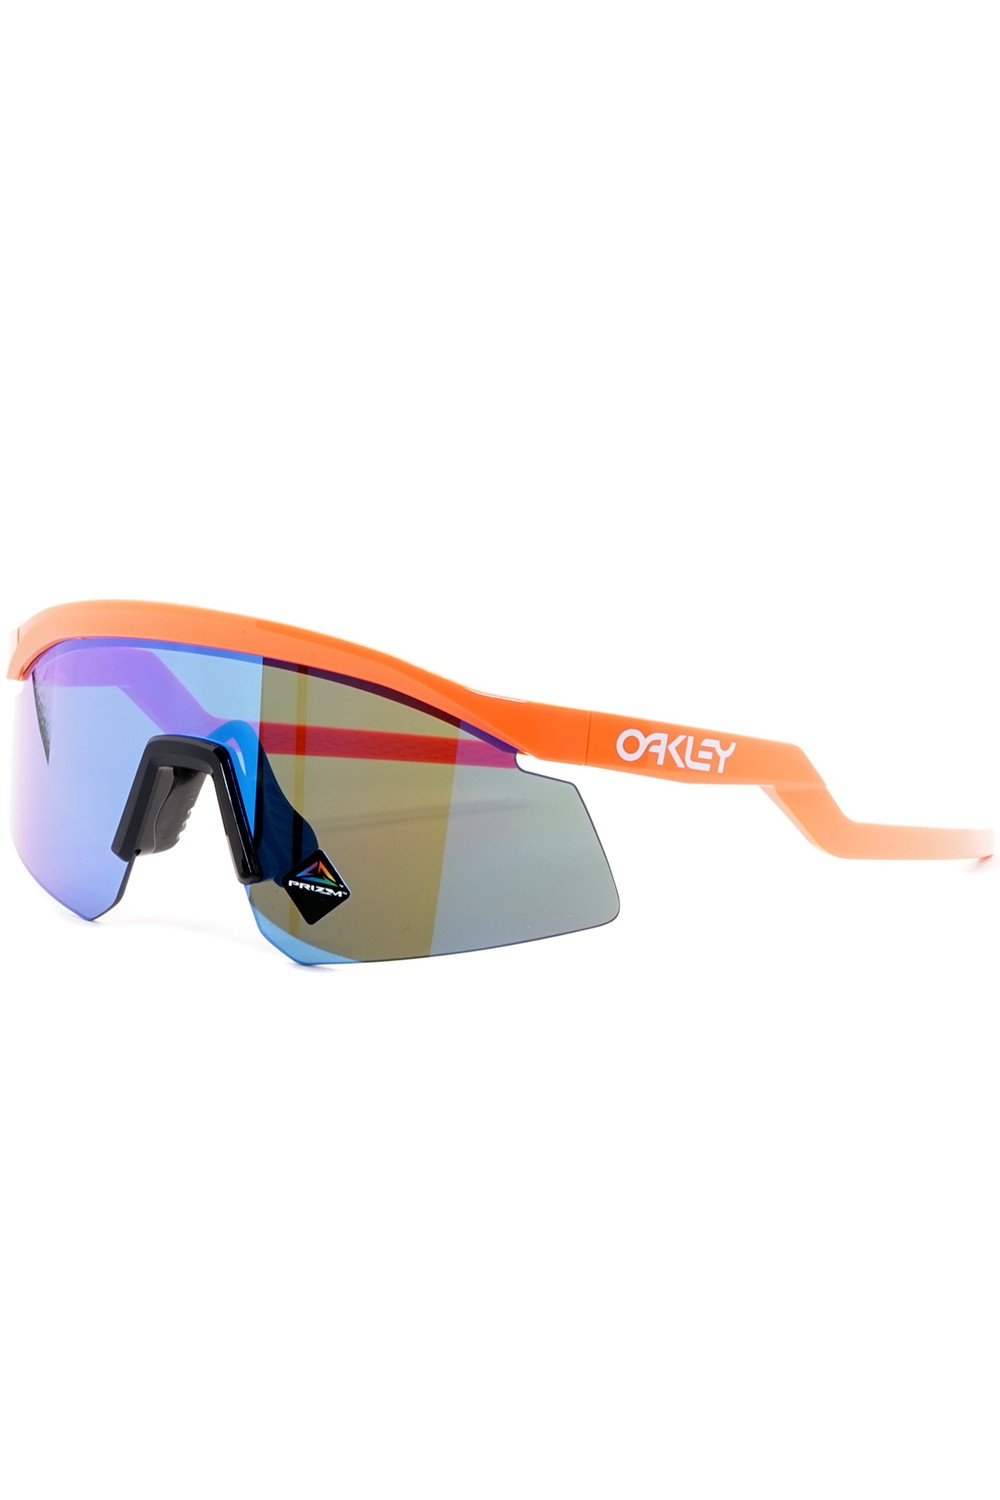 Oakley - Occhiali da sole sportivi avvolgenti unisex arancione - OO9229 0637